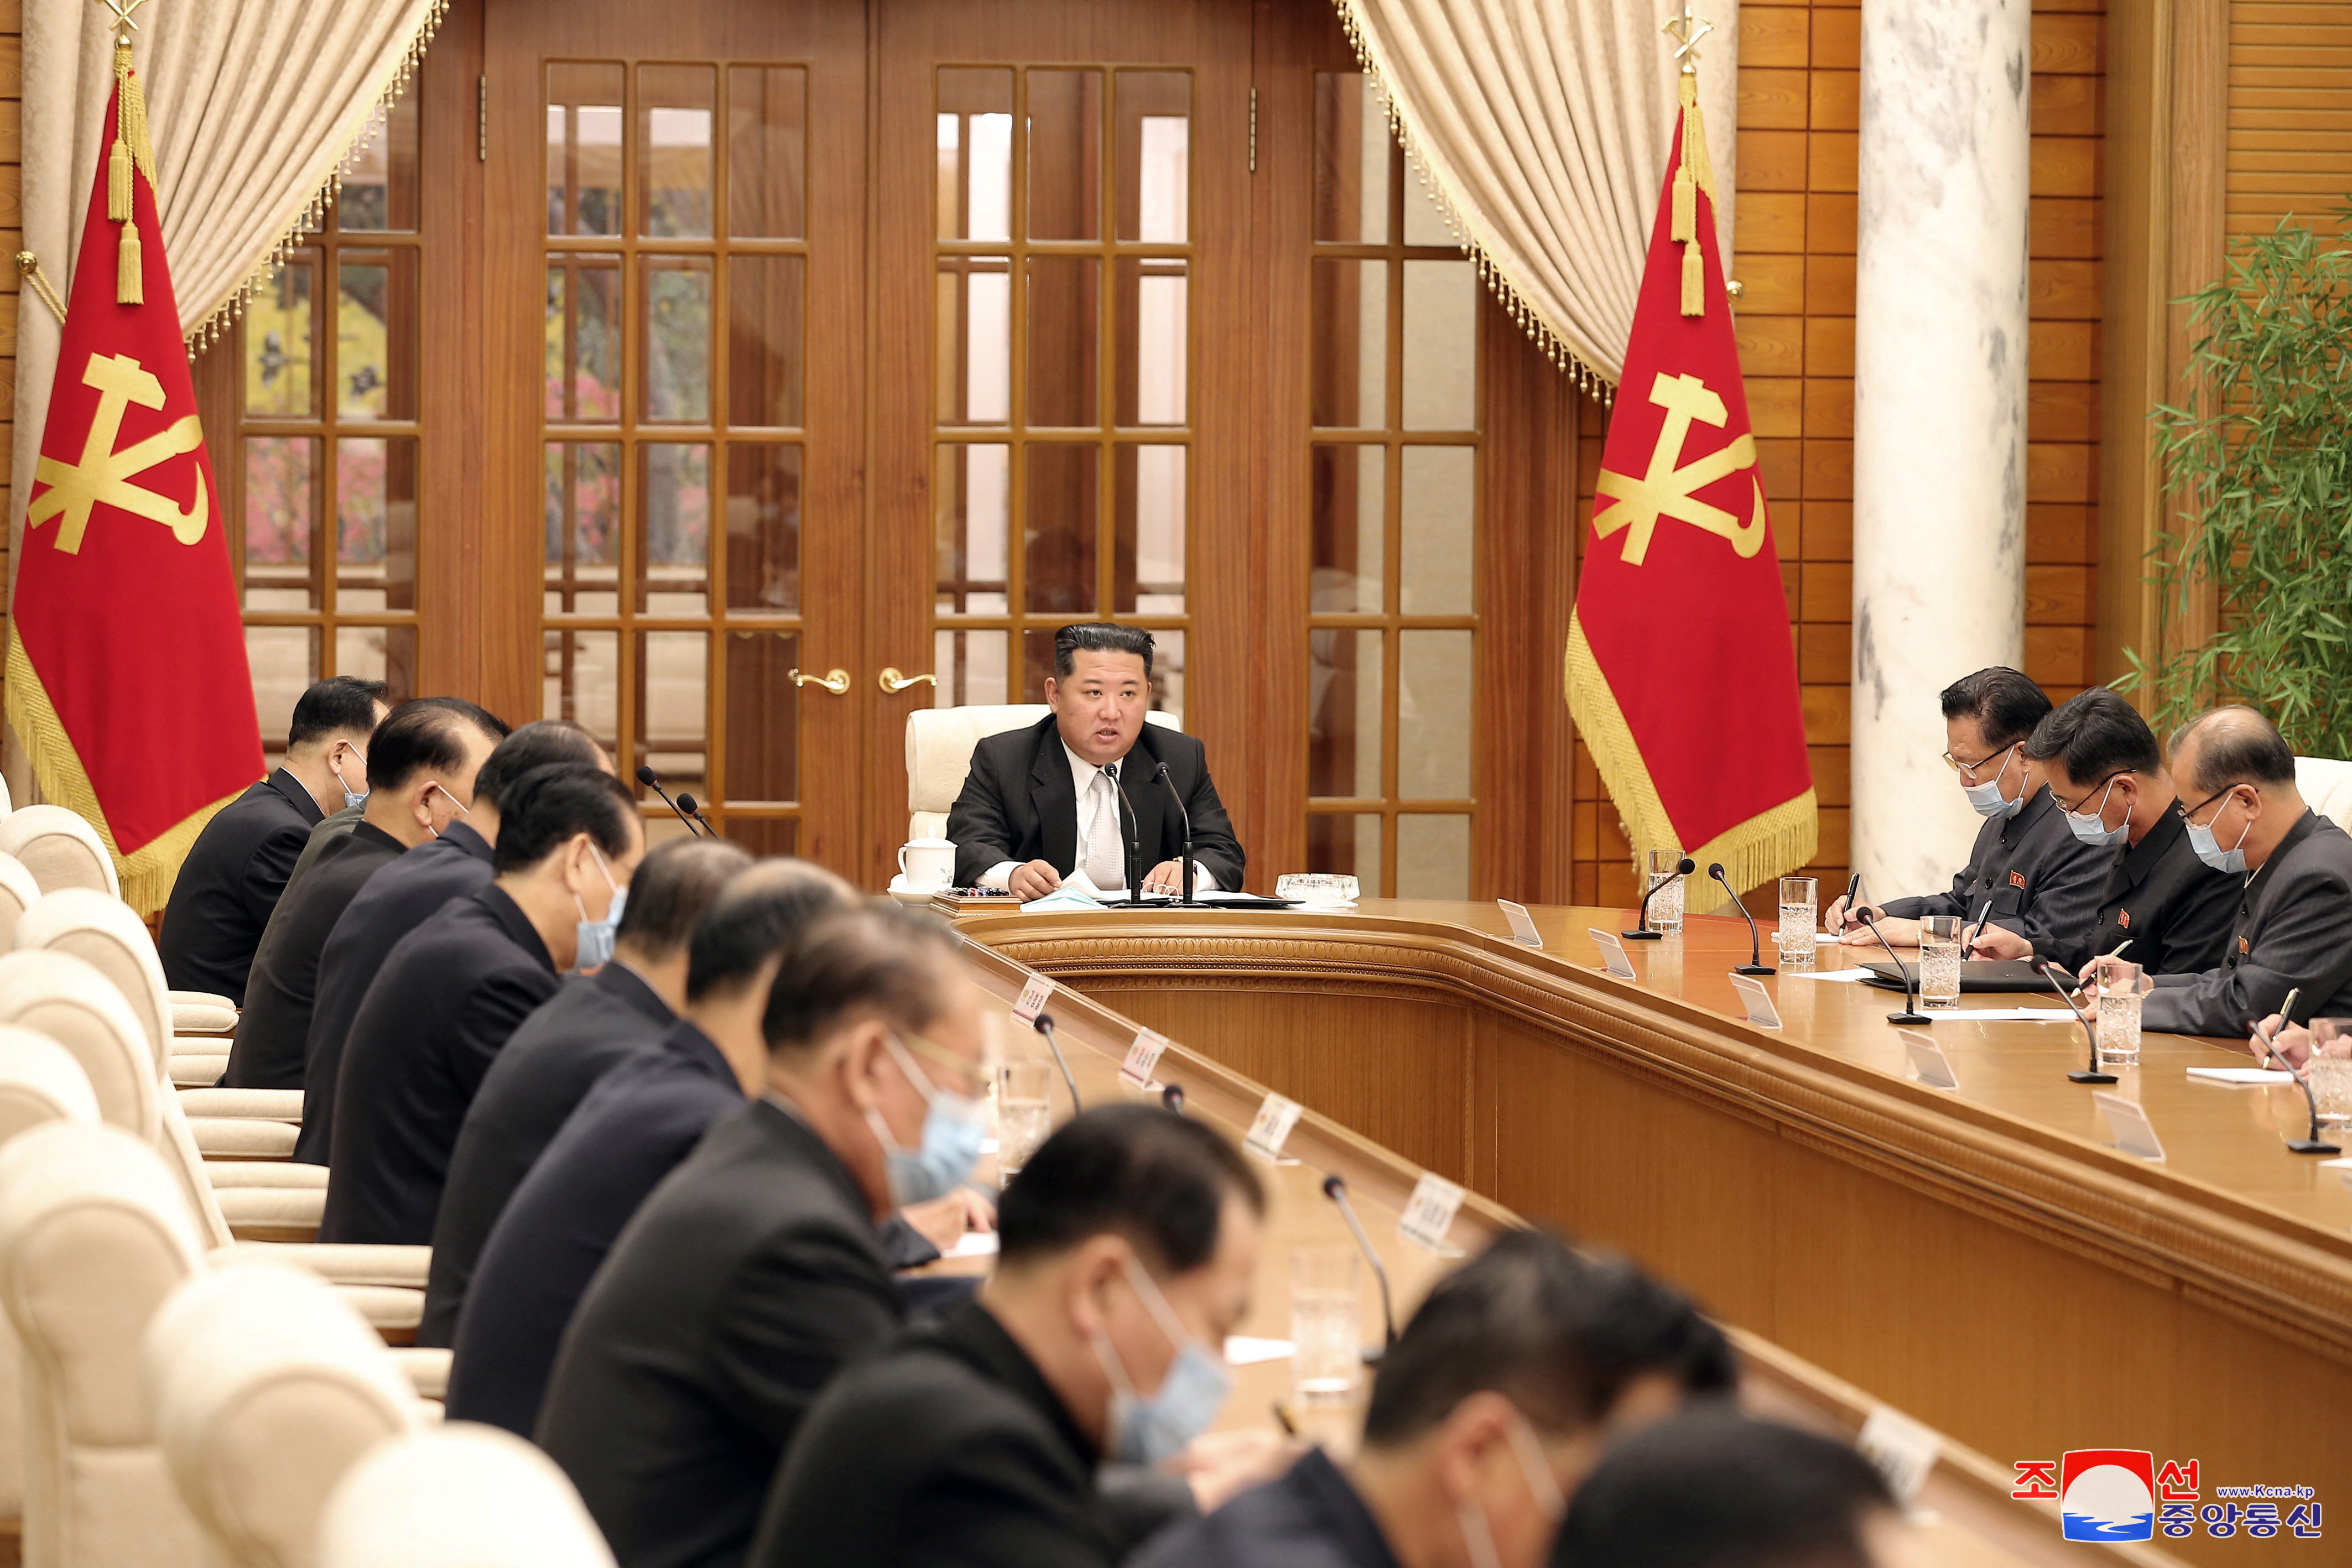 North Korean leader Kim Jong Un chairs a Worker's Party meeting on coronavirus disease (COVID-19) outbreak response